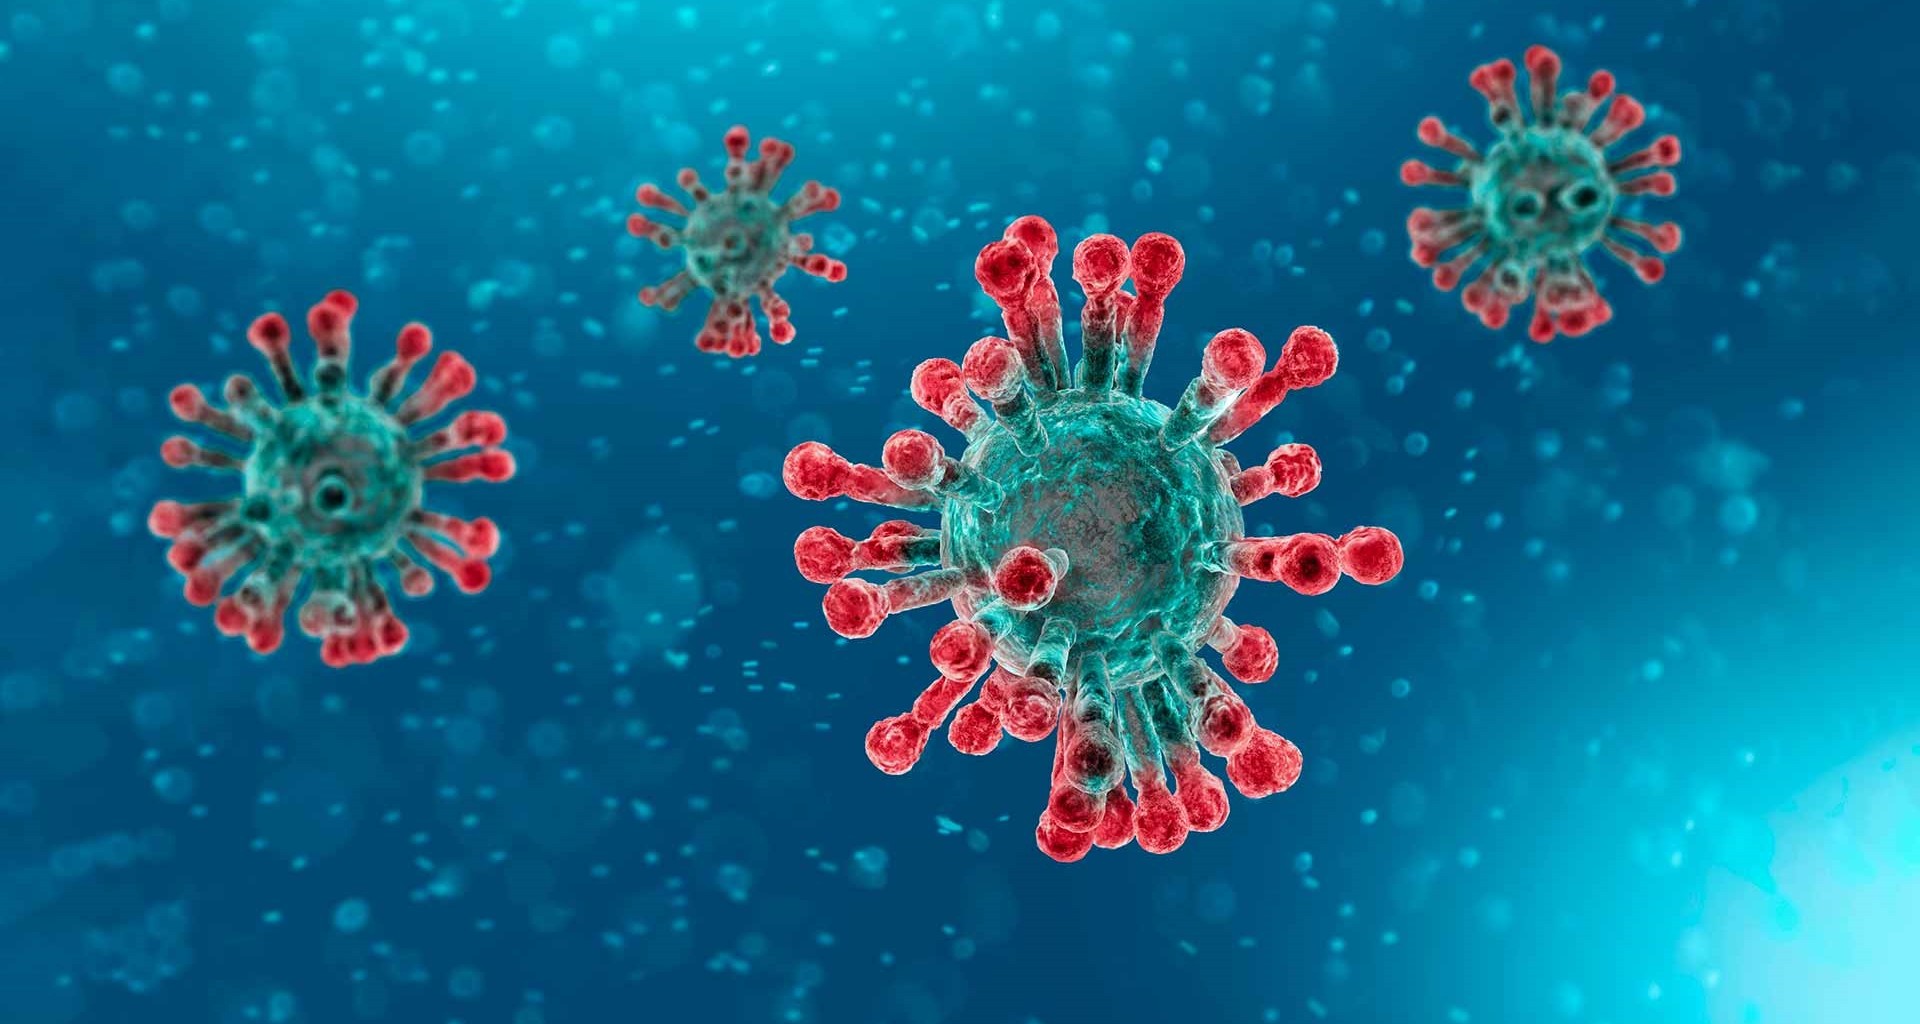 Aseguran Gobierno toma a la ligera el Coronavirus 